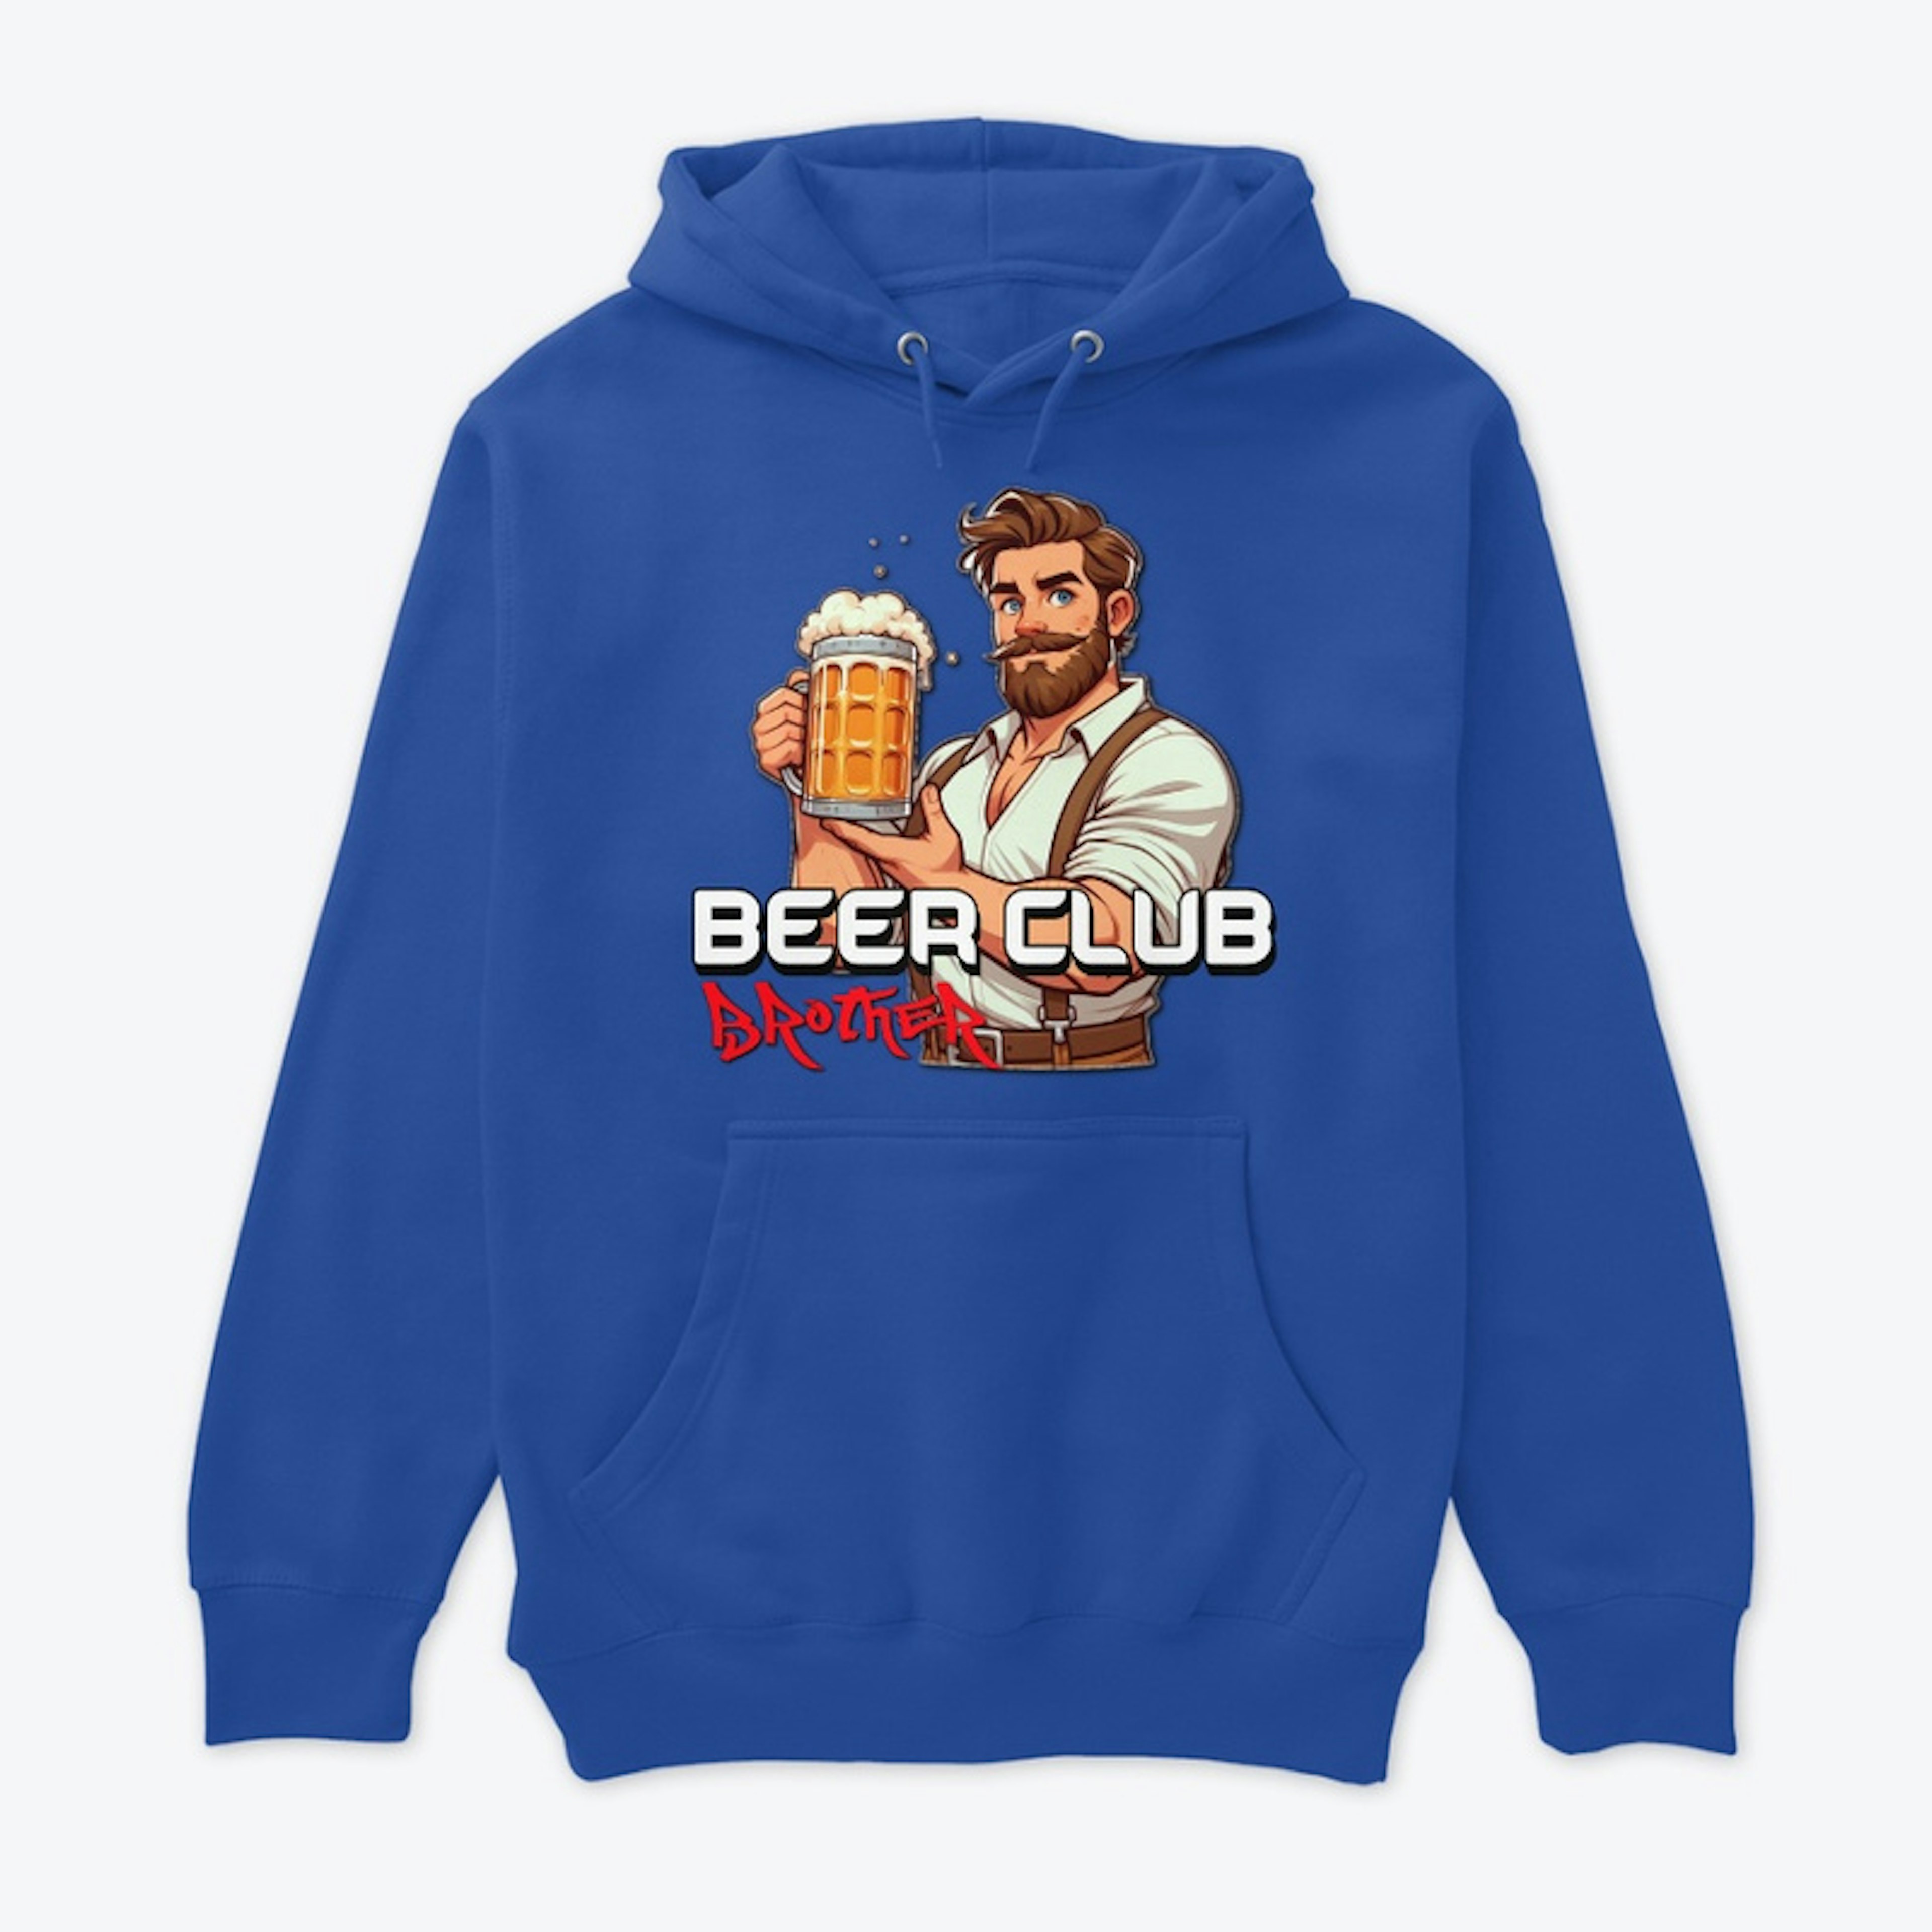 Beer Club Brother